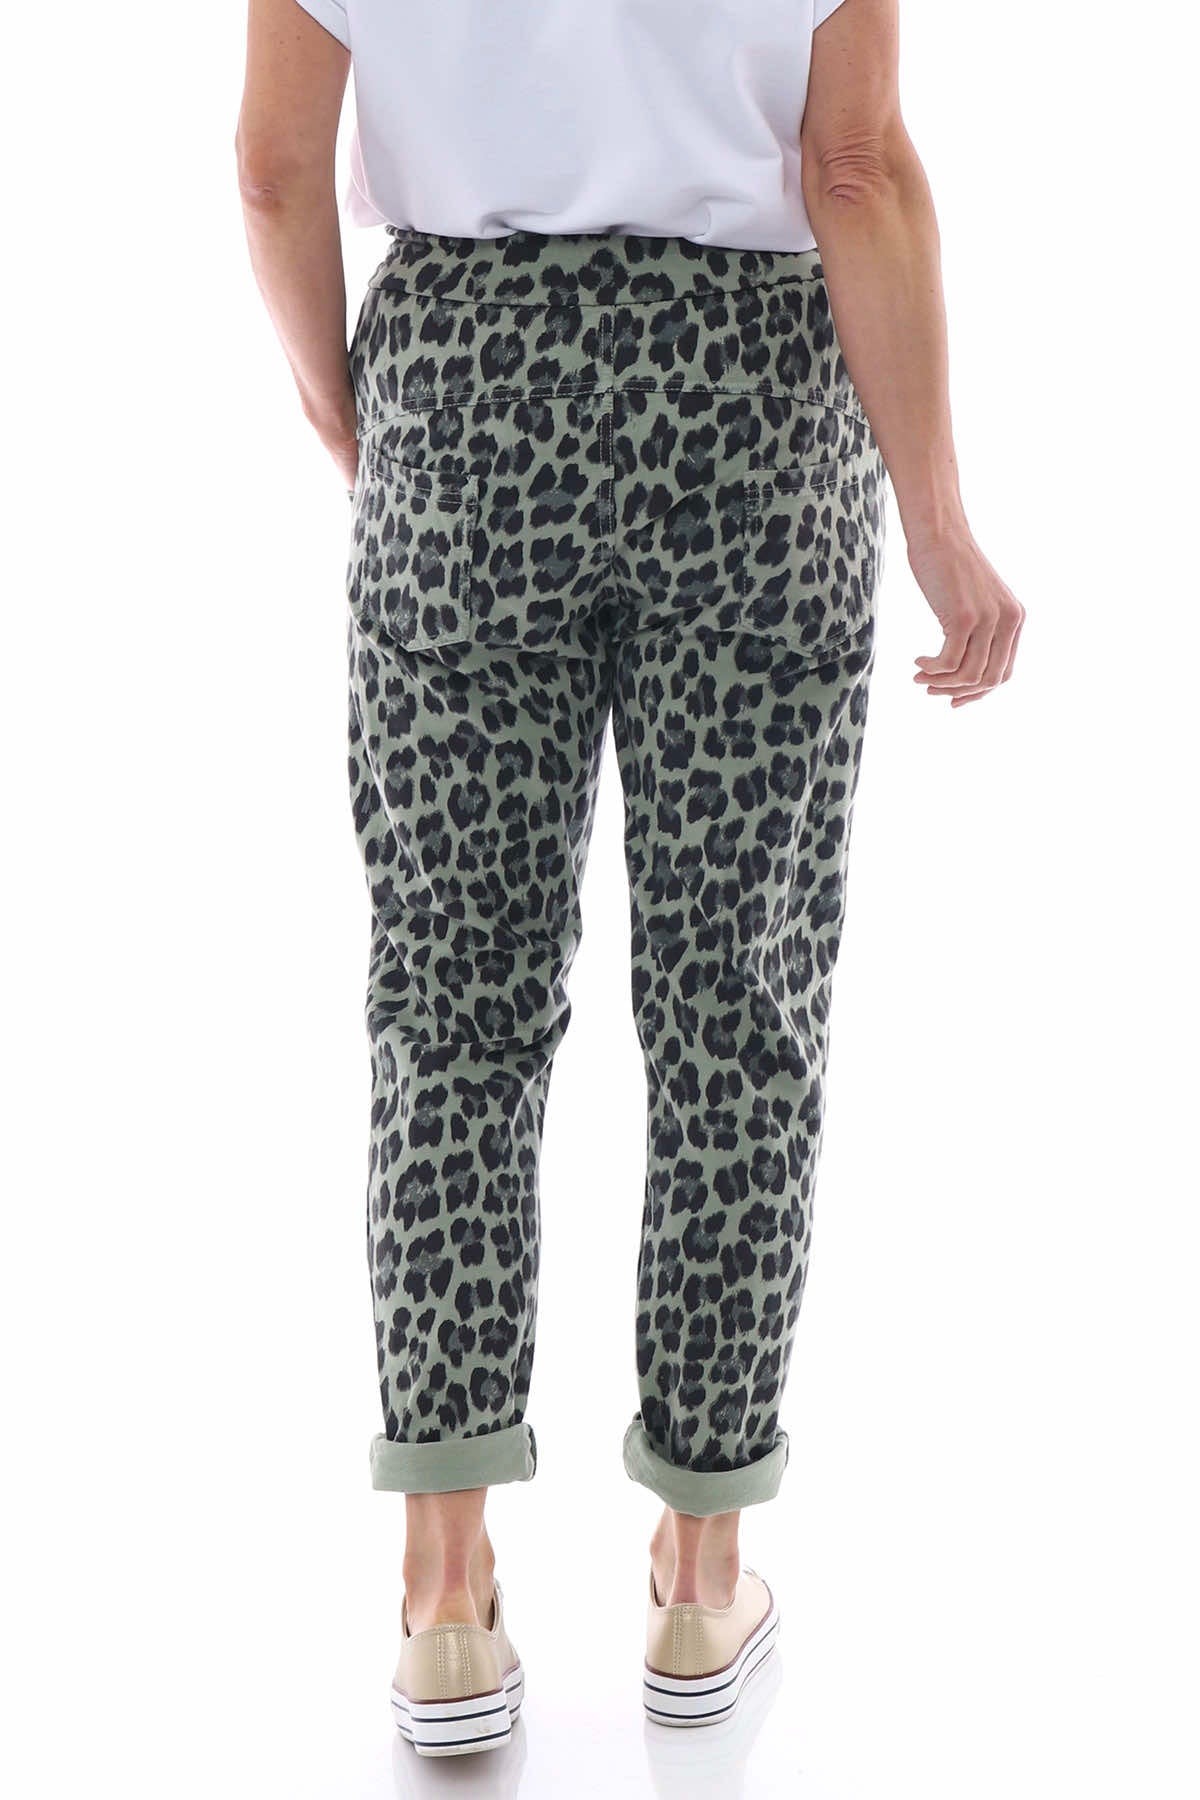 Minskip Leopard Print Jersey Pants Light Khaki